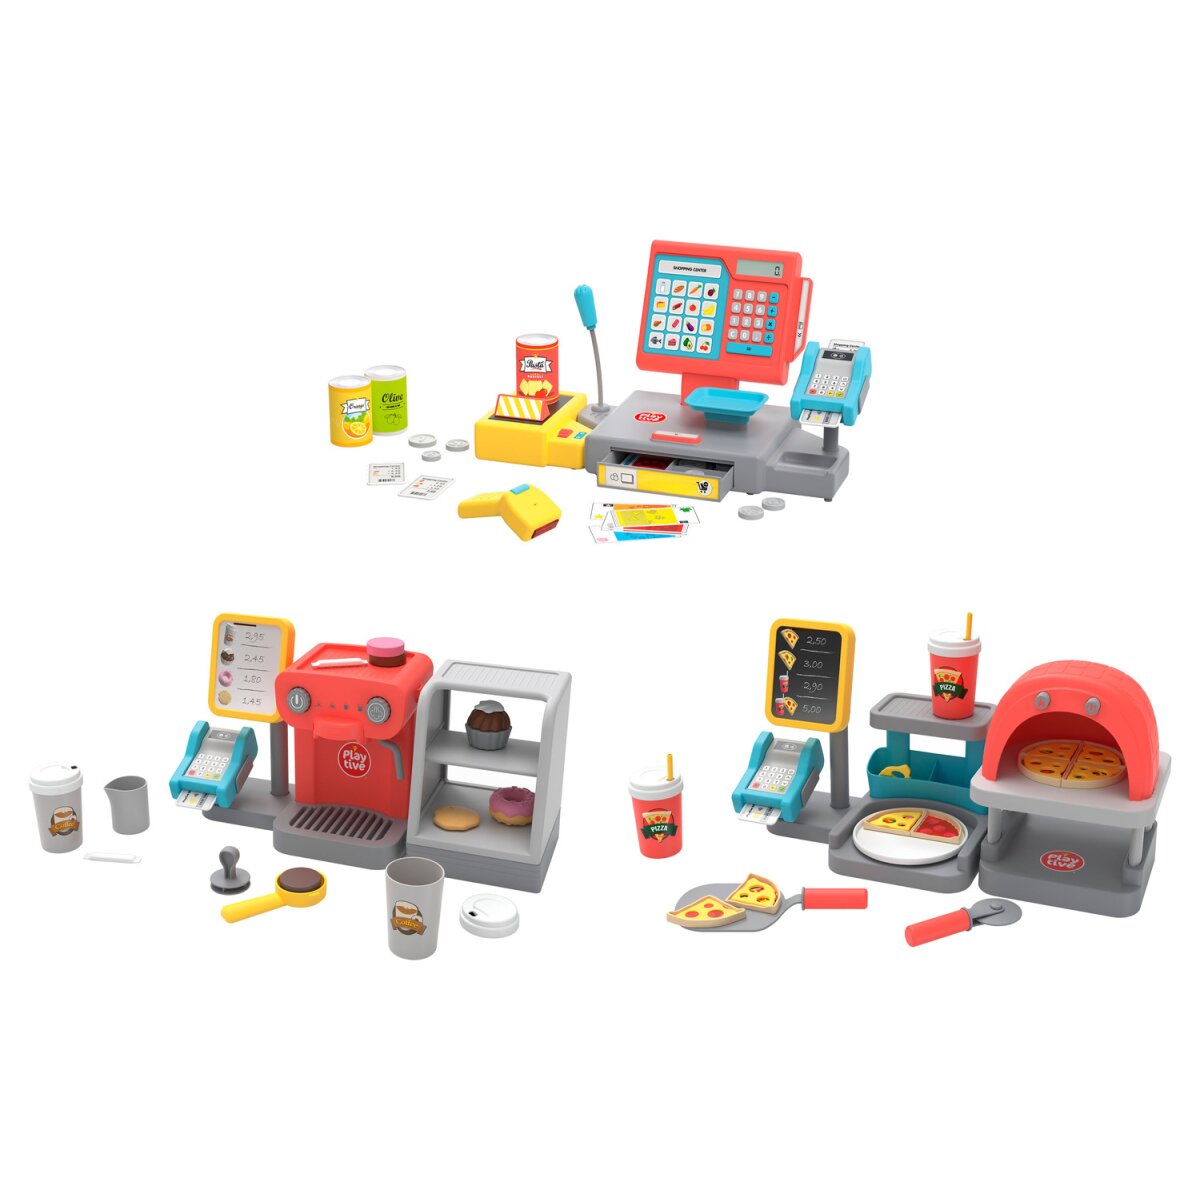 B-Ware, Cafe-Shop € / 12,99 - Pizza-Shop Spielzeugkasse / Playtive